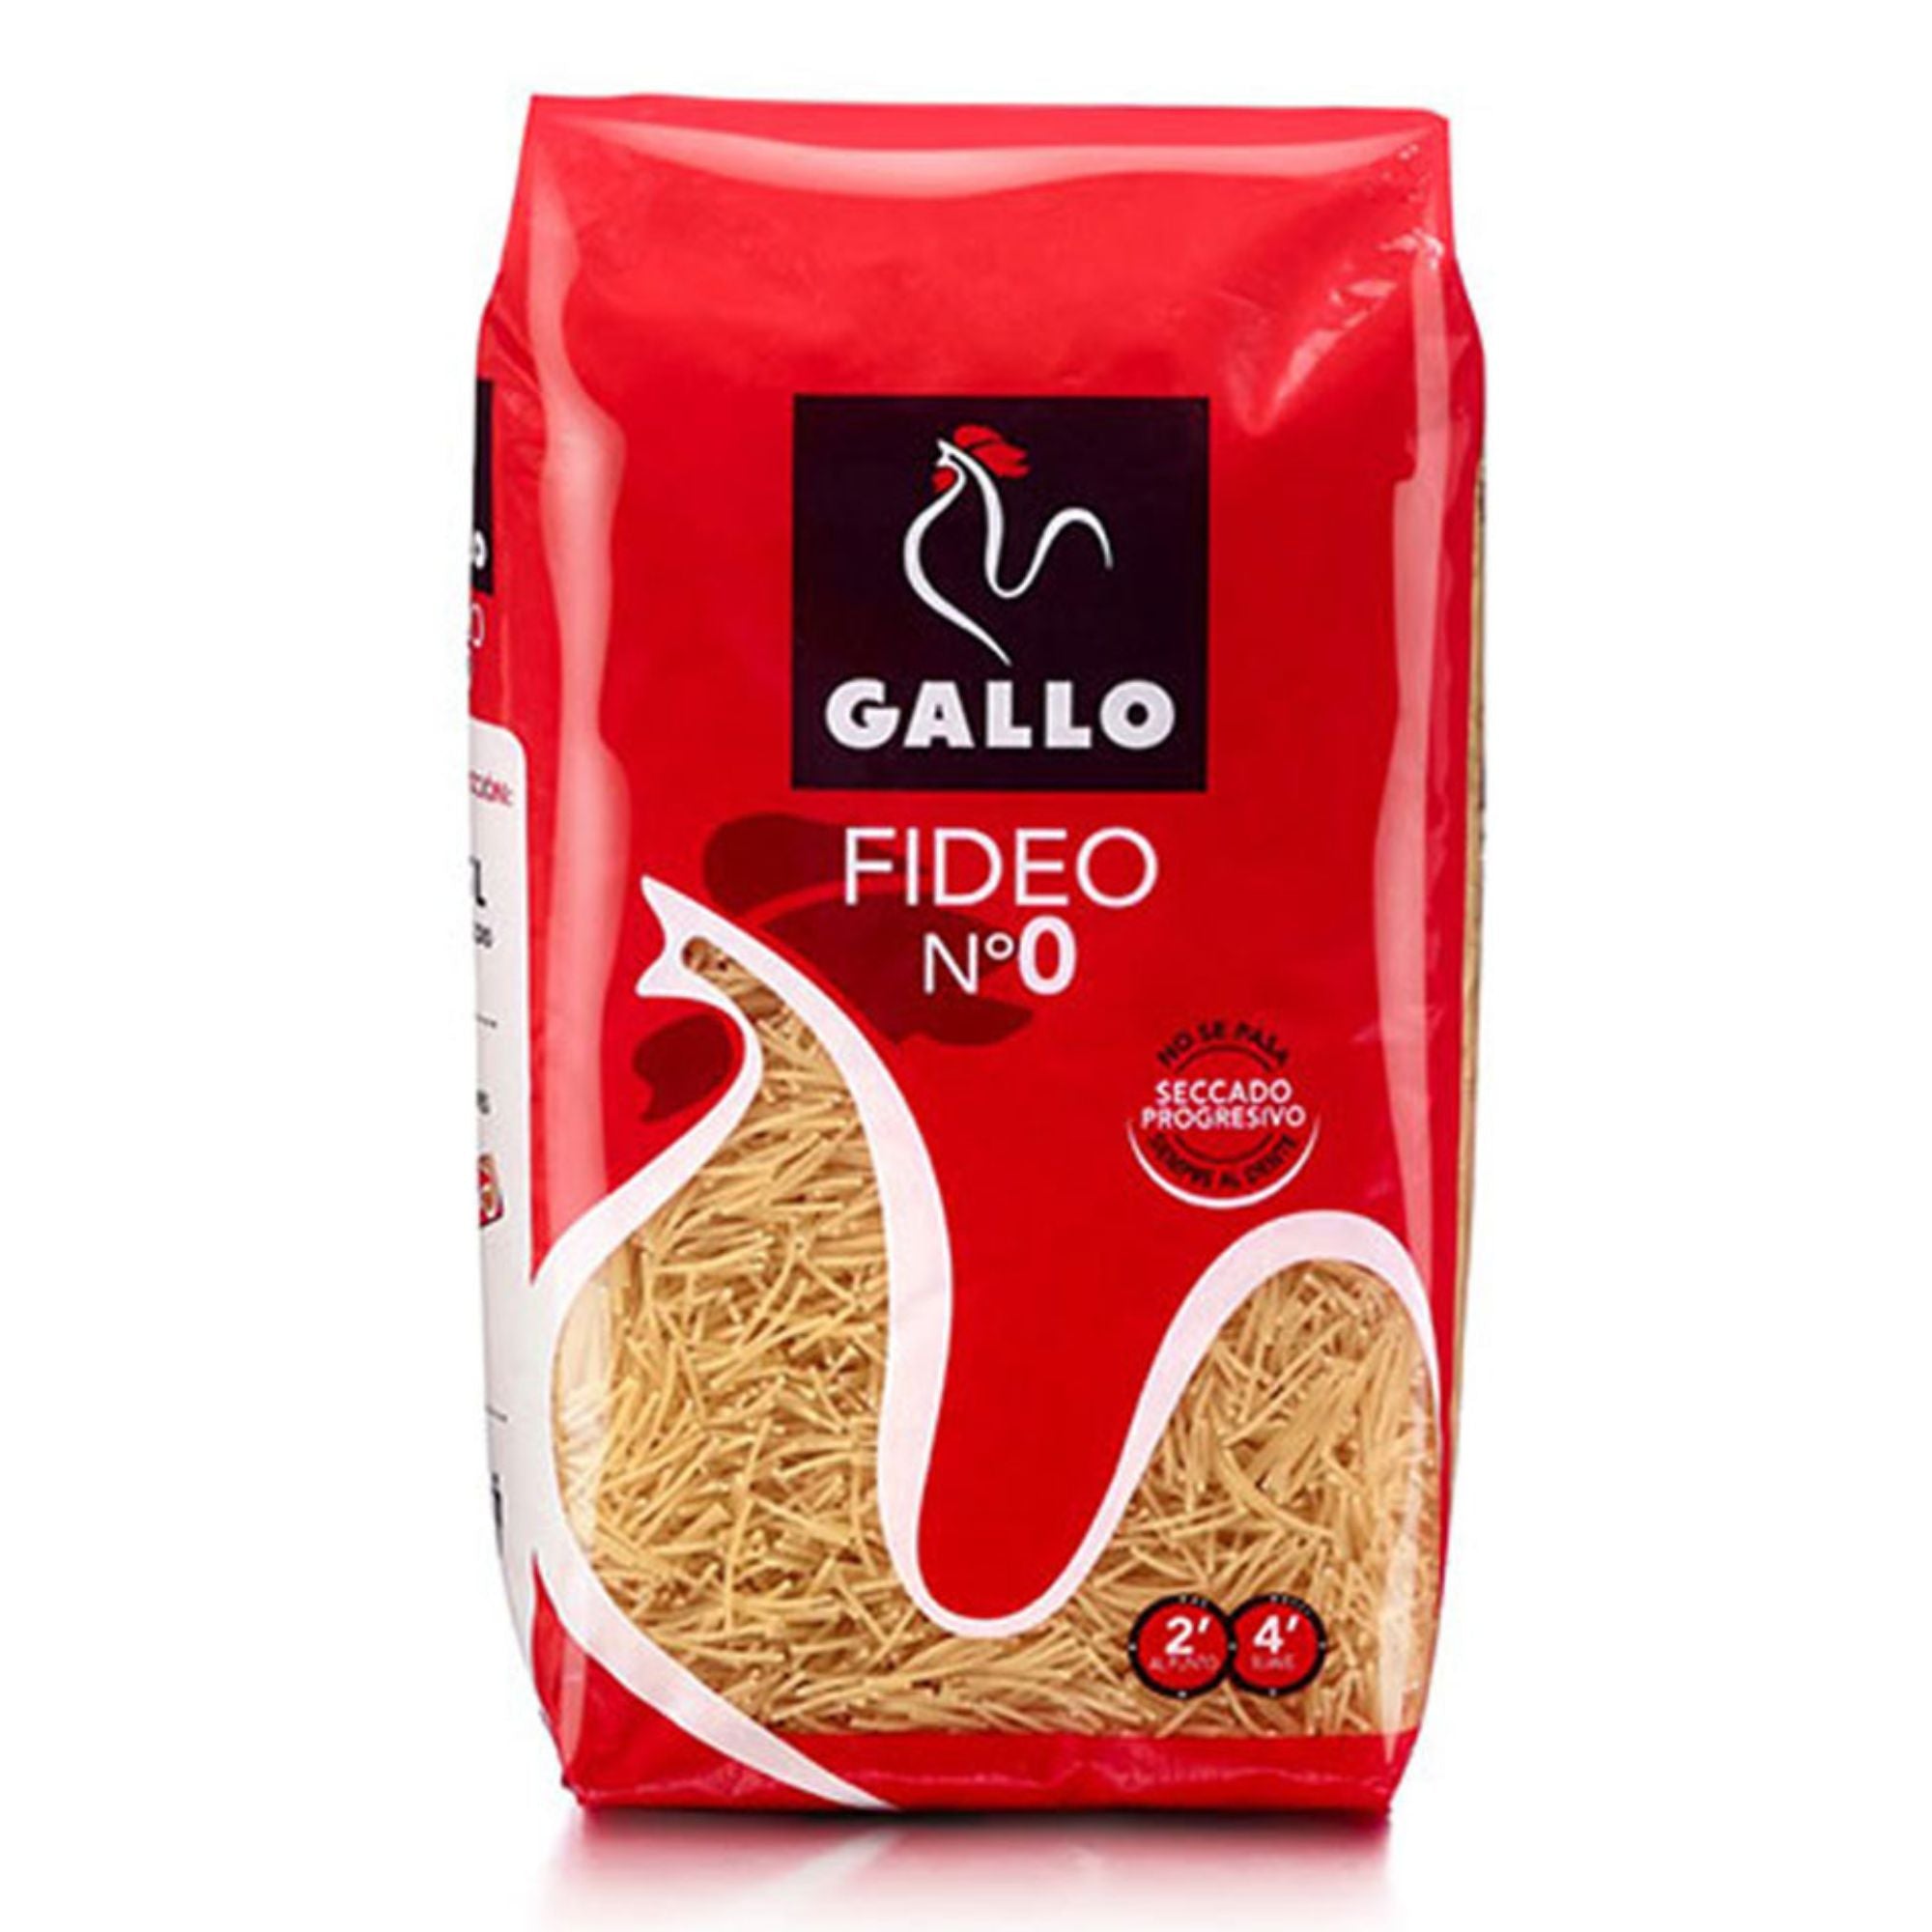 Fideo Gallo 450g - Pastas La casa del bacalao